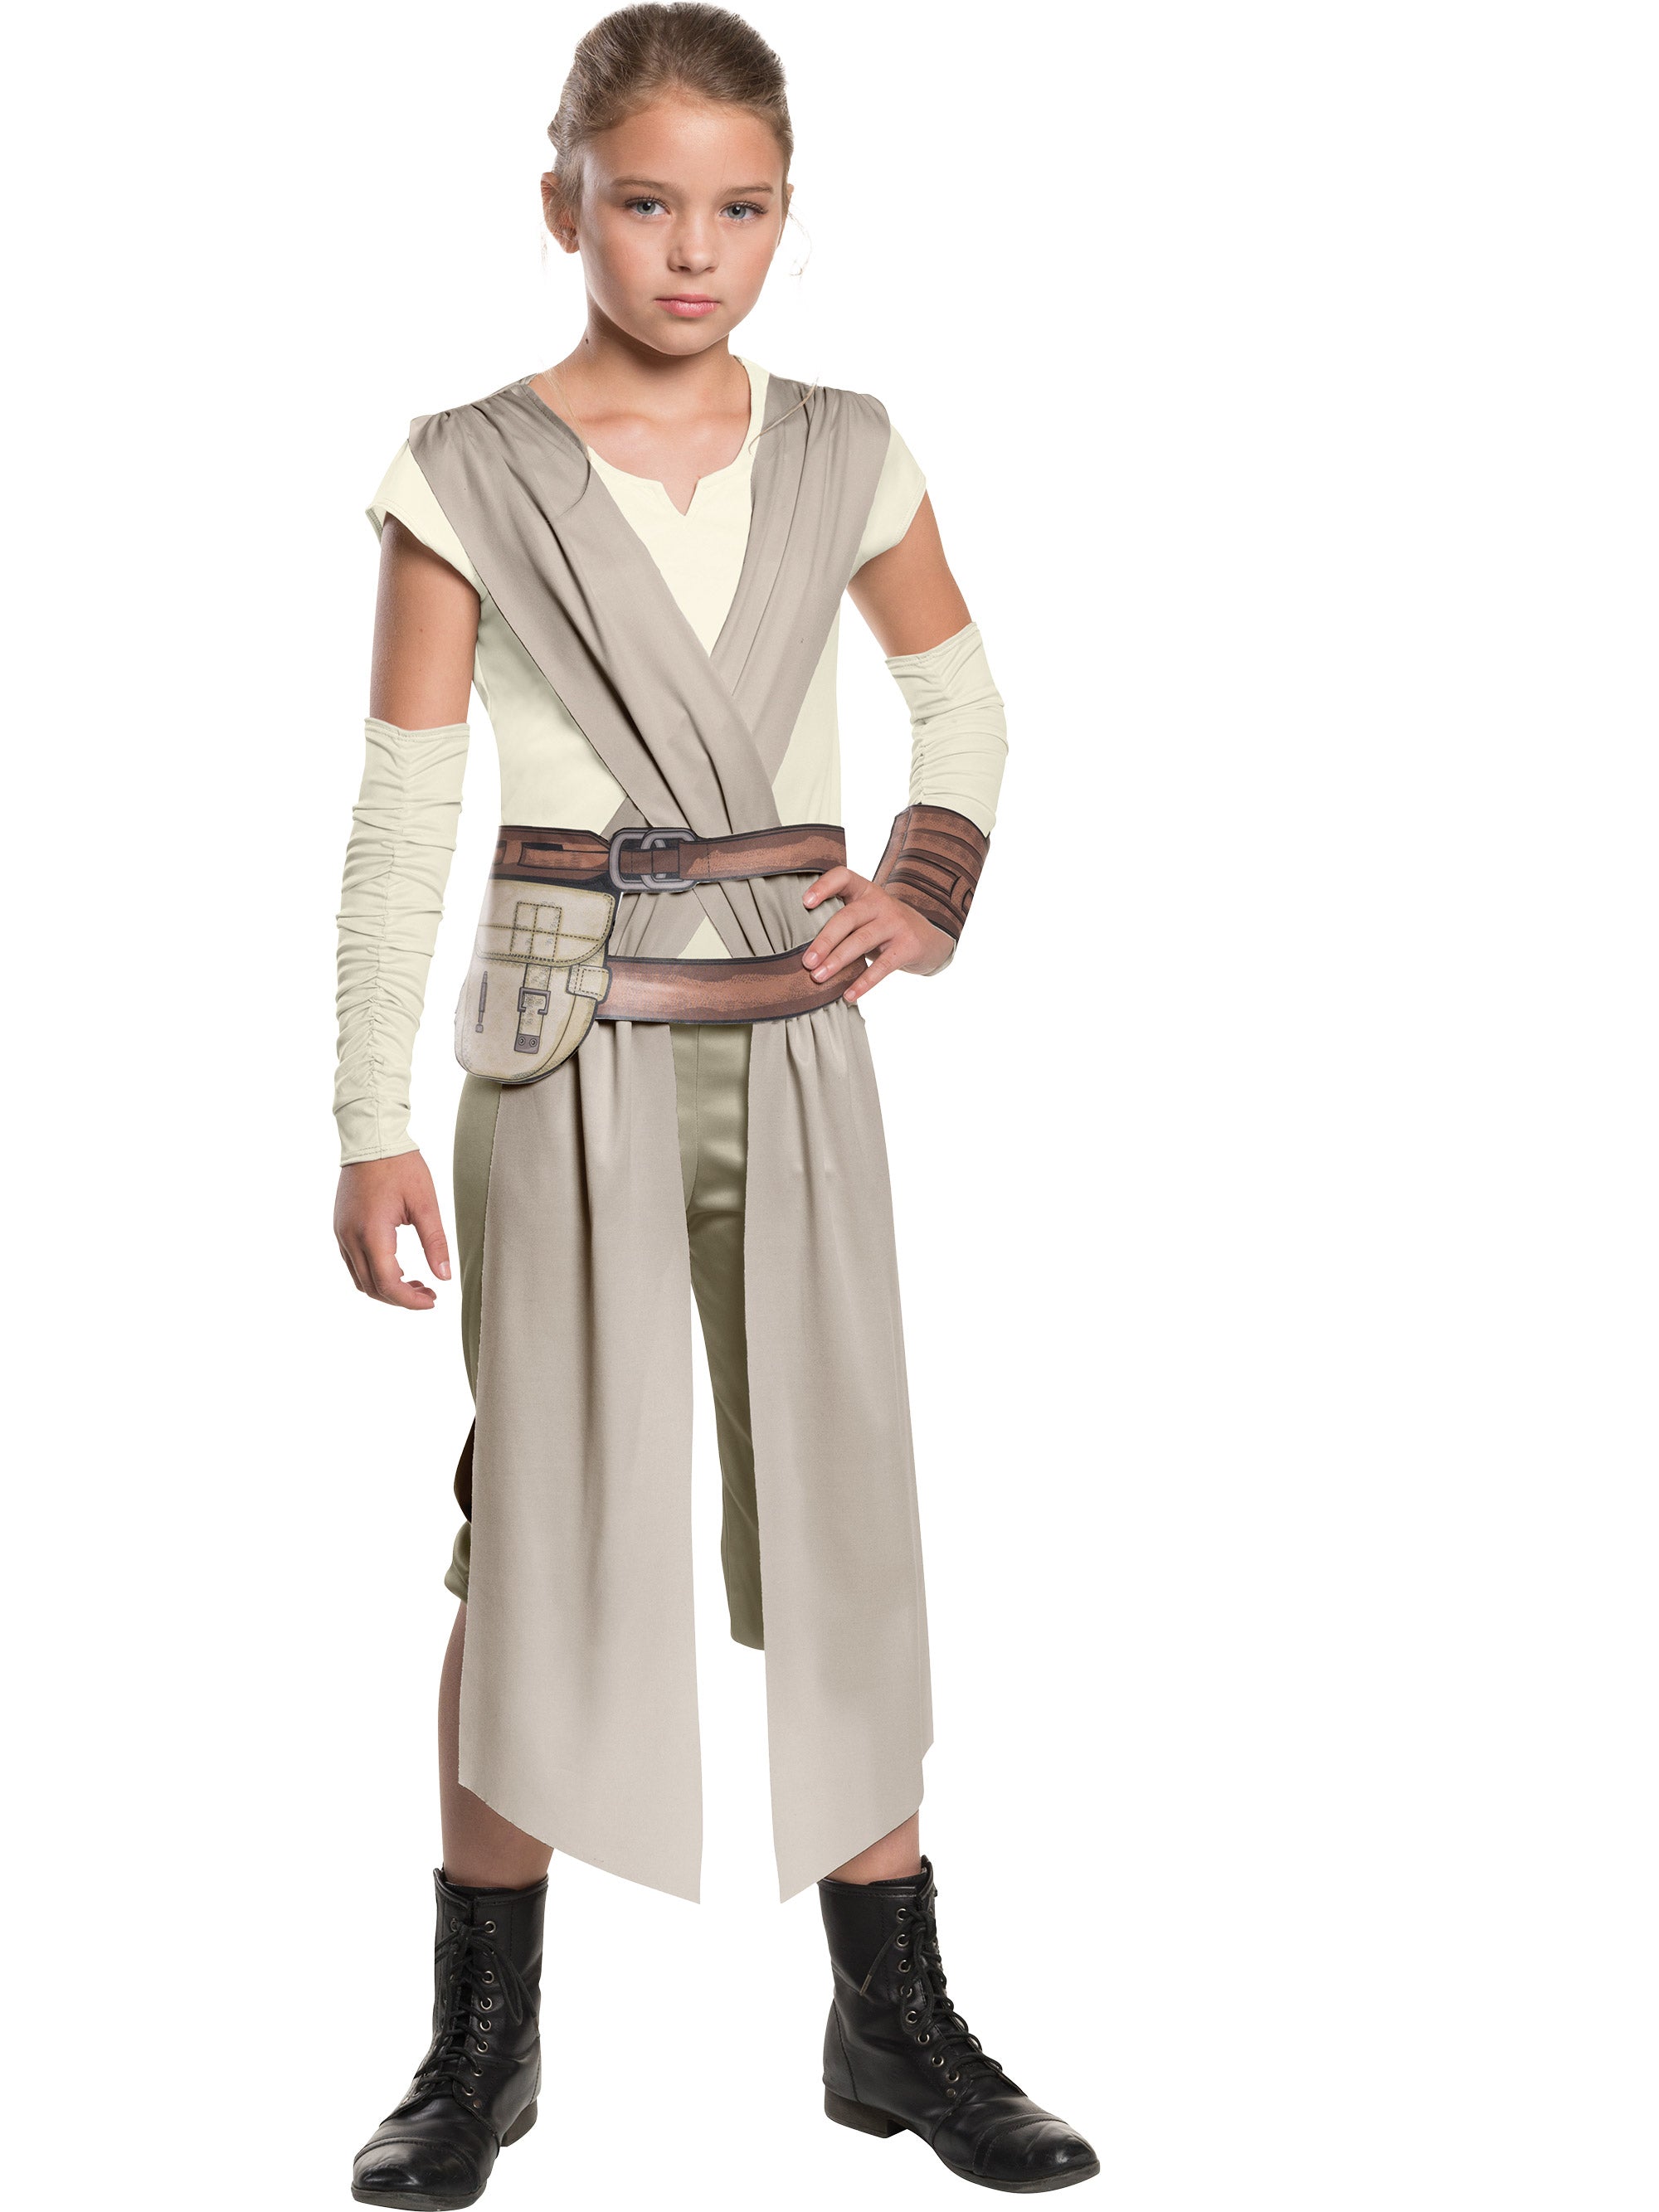 Kids The Force Awakens Rey Costume - costumes.com